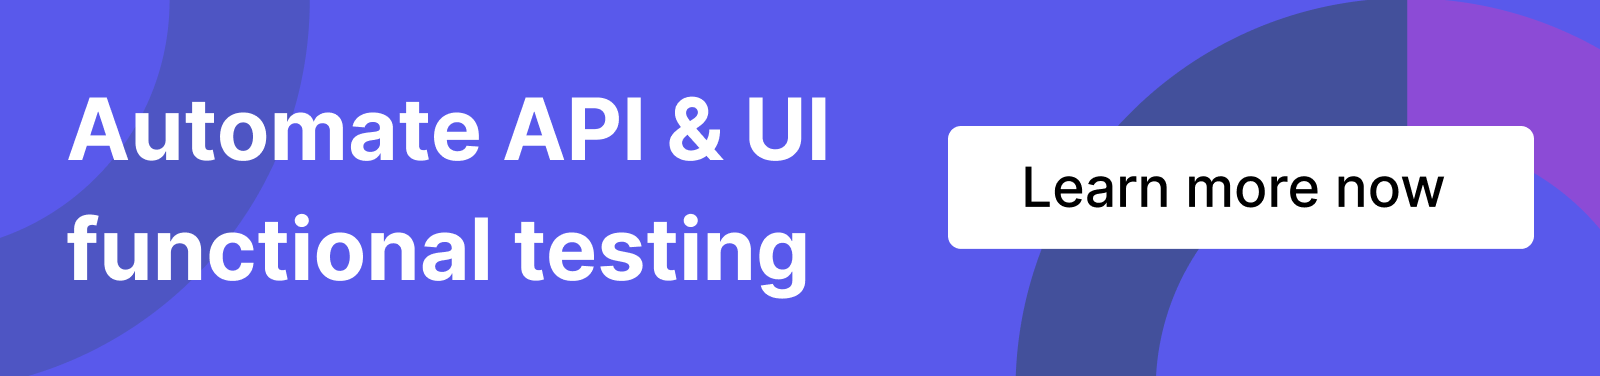 Automate API and UI functional testing with Katalon